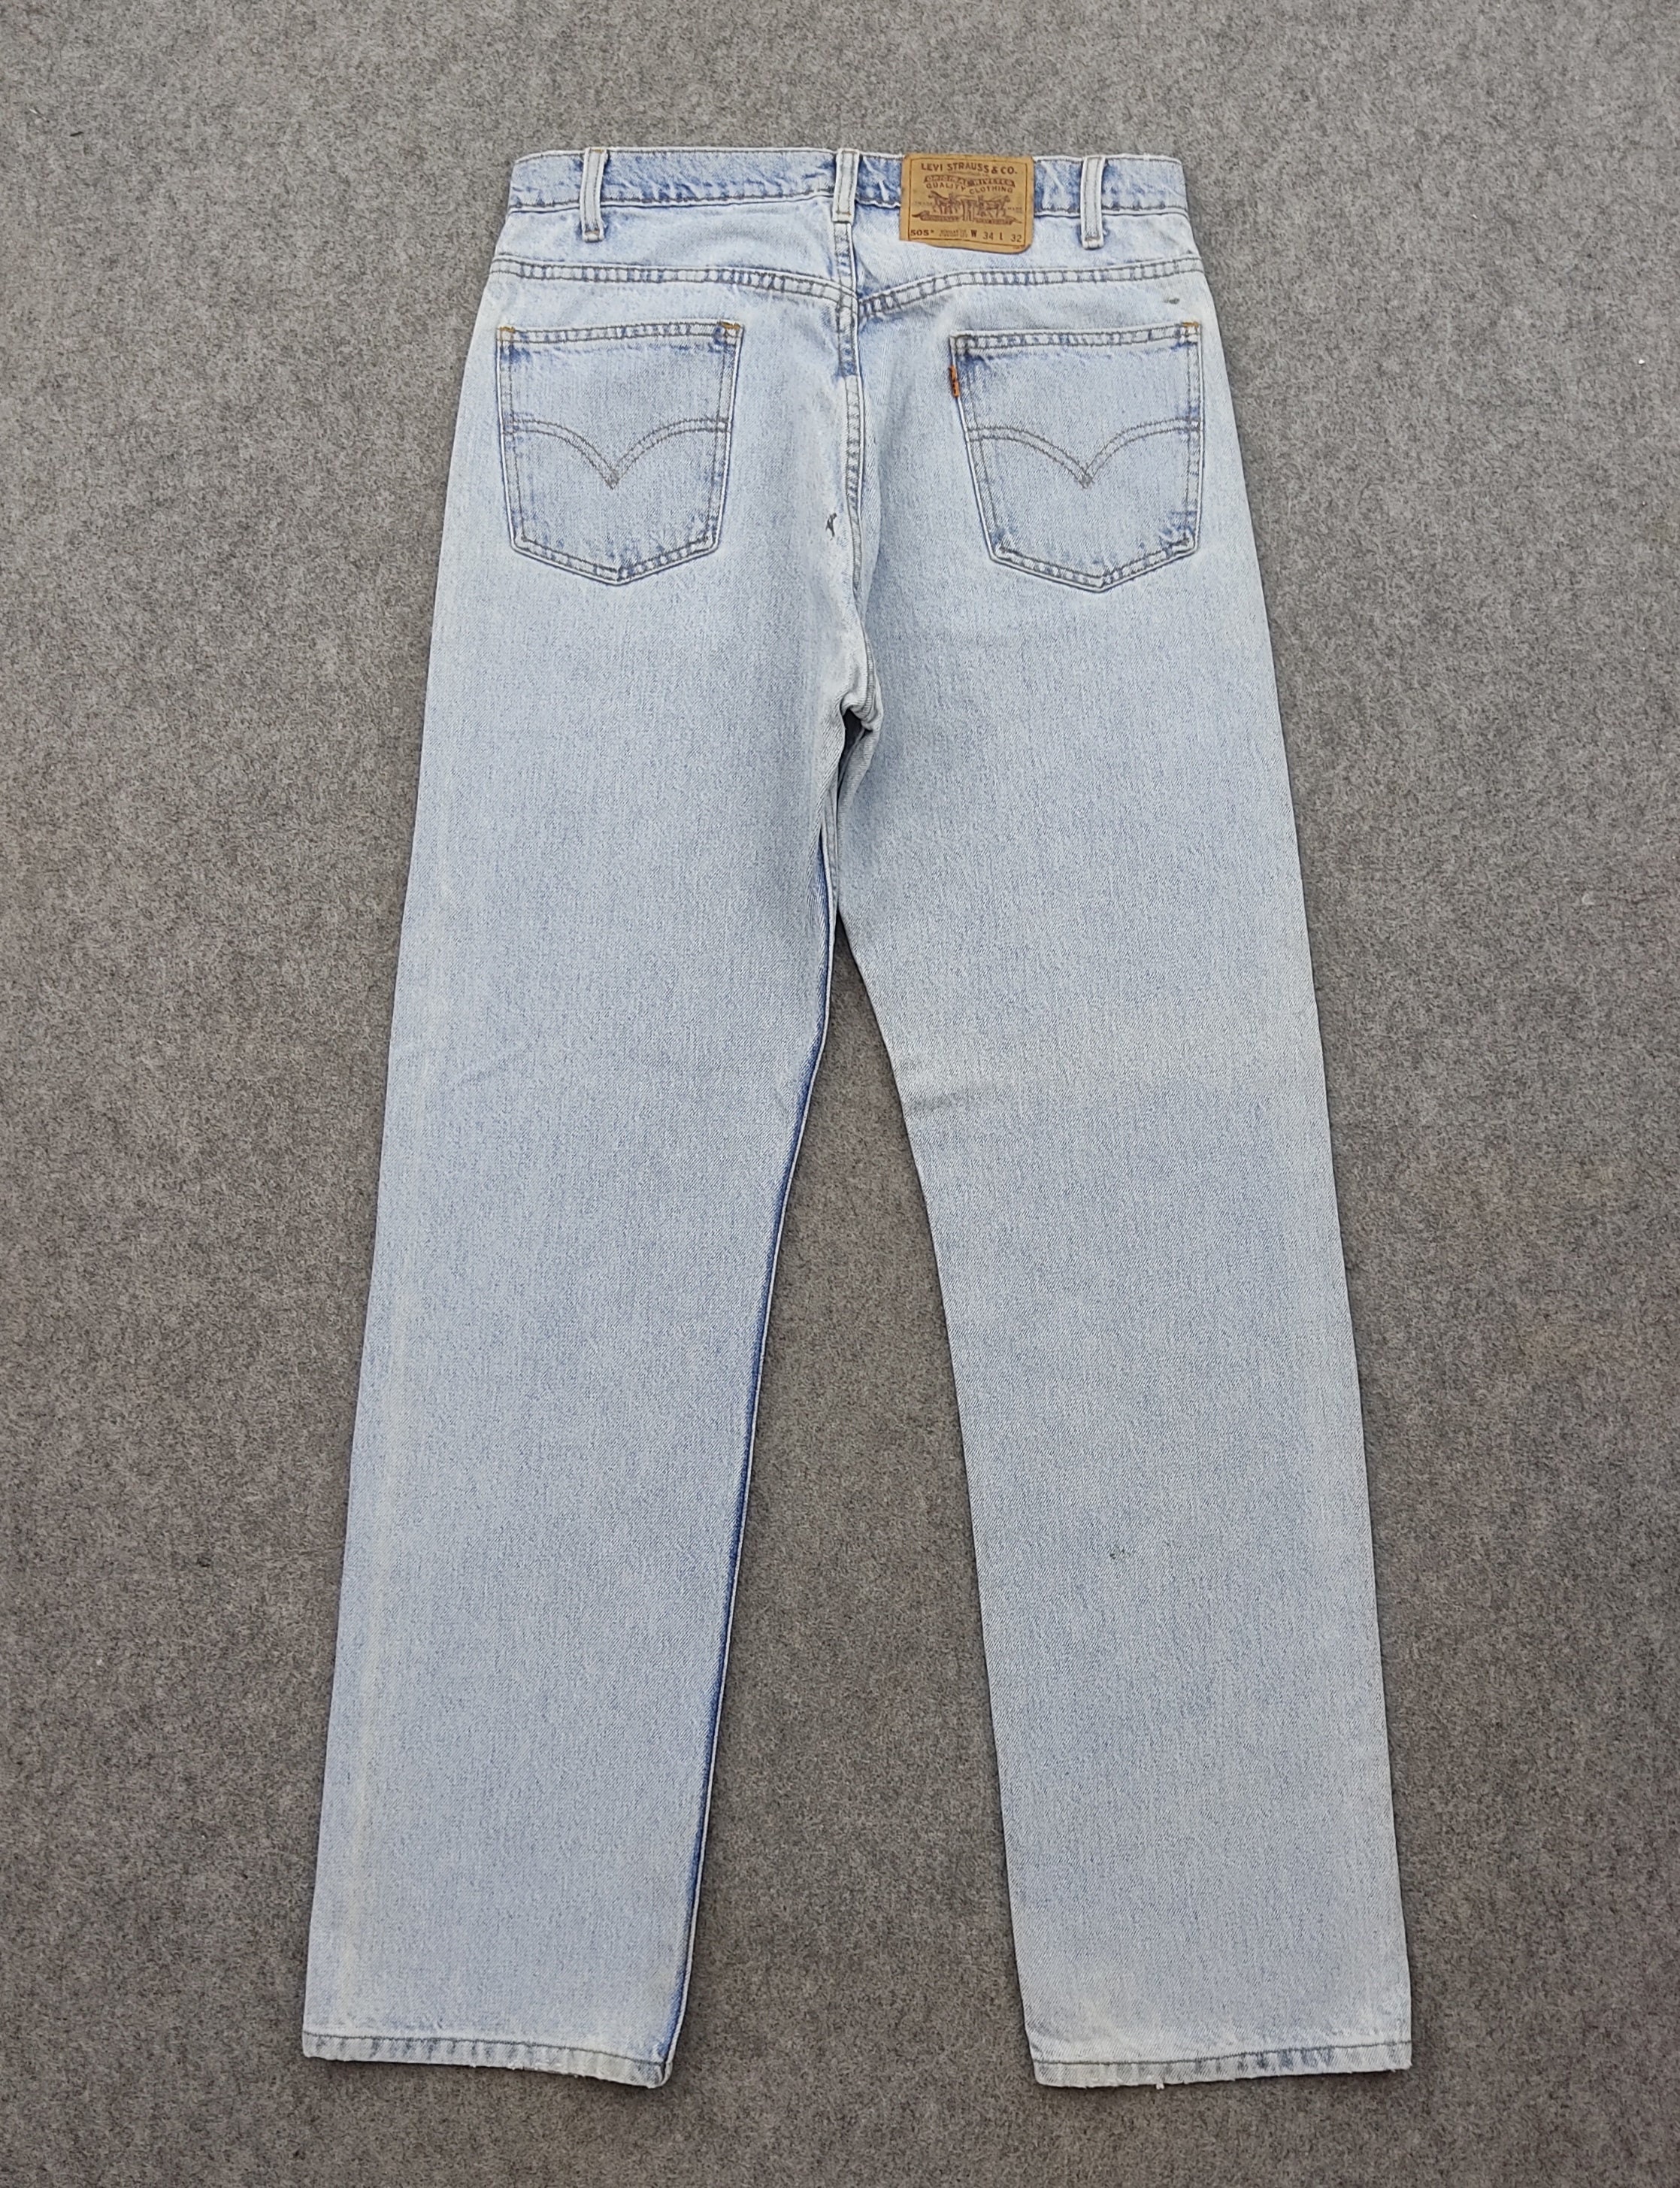 34 X 33 90s Vintage Levis 505 Jeans Orange Tab Jeans Light - Etsy